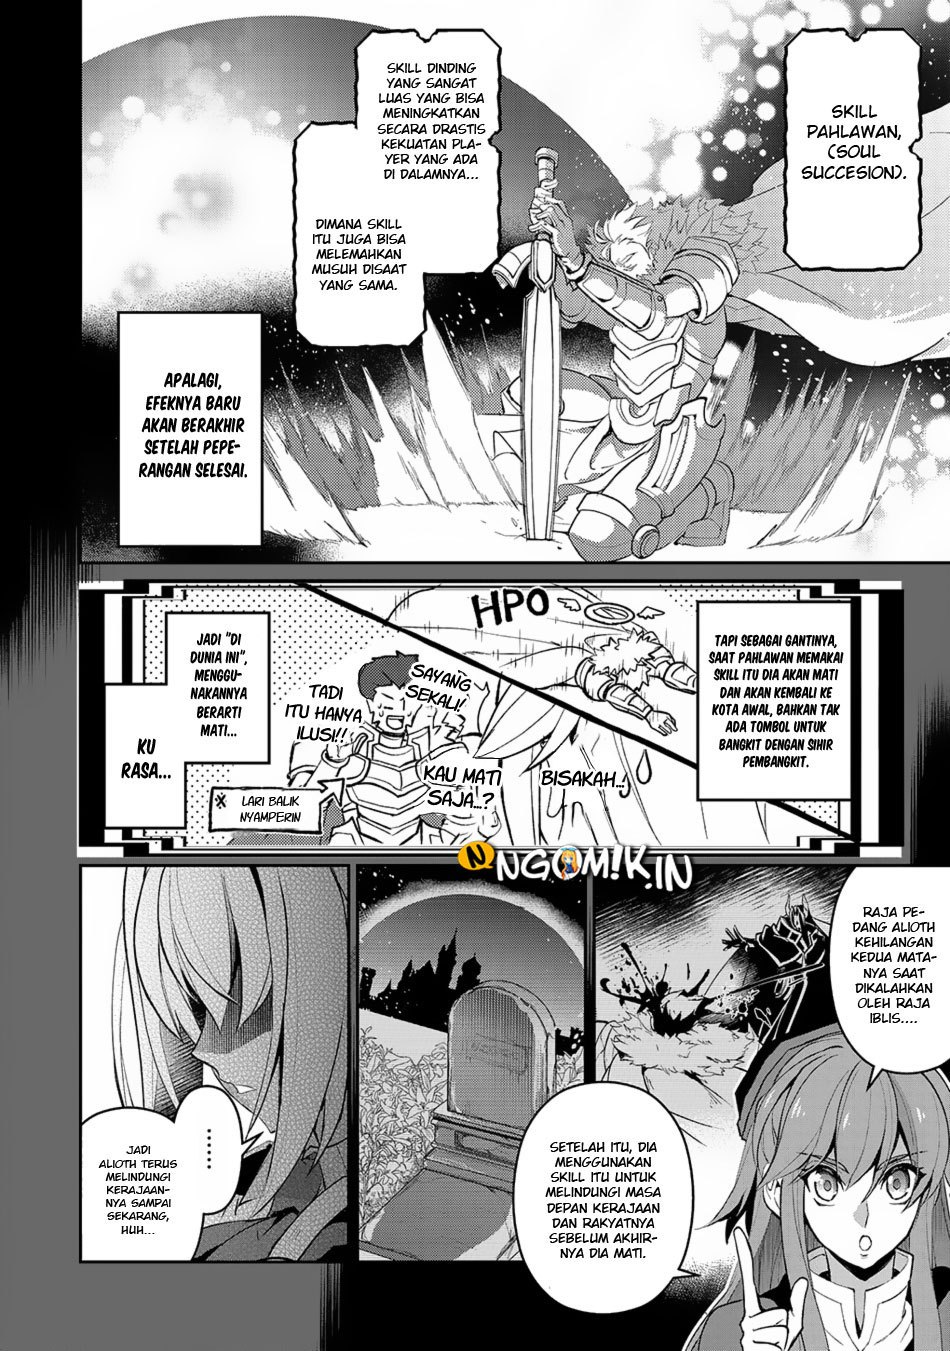 Yasei no Last Boss ga Arawareta! Chapter 18